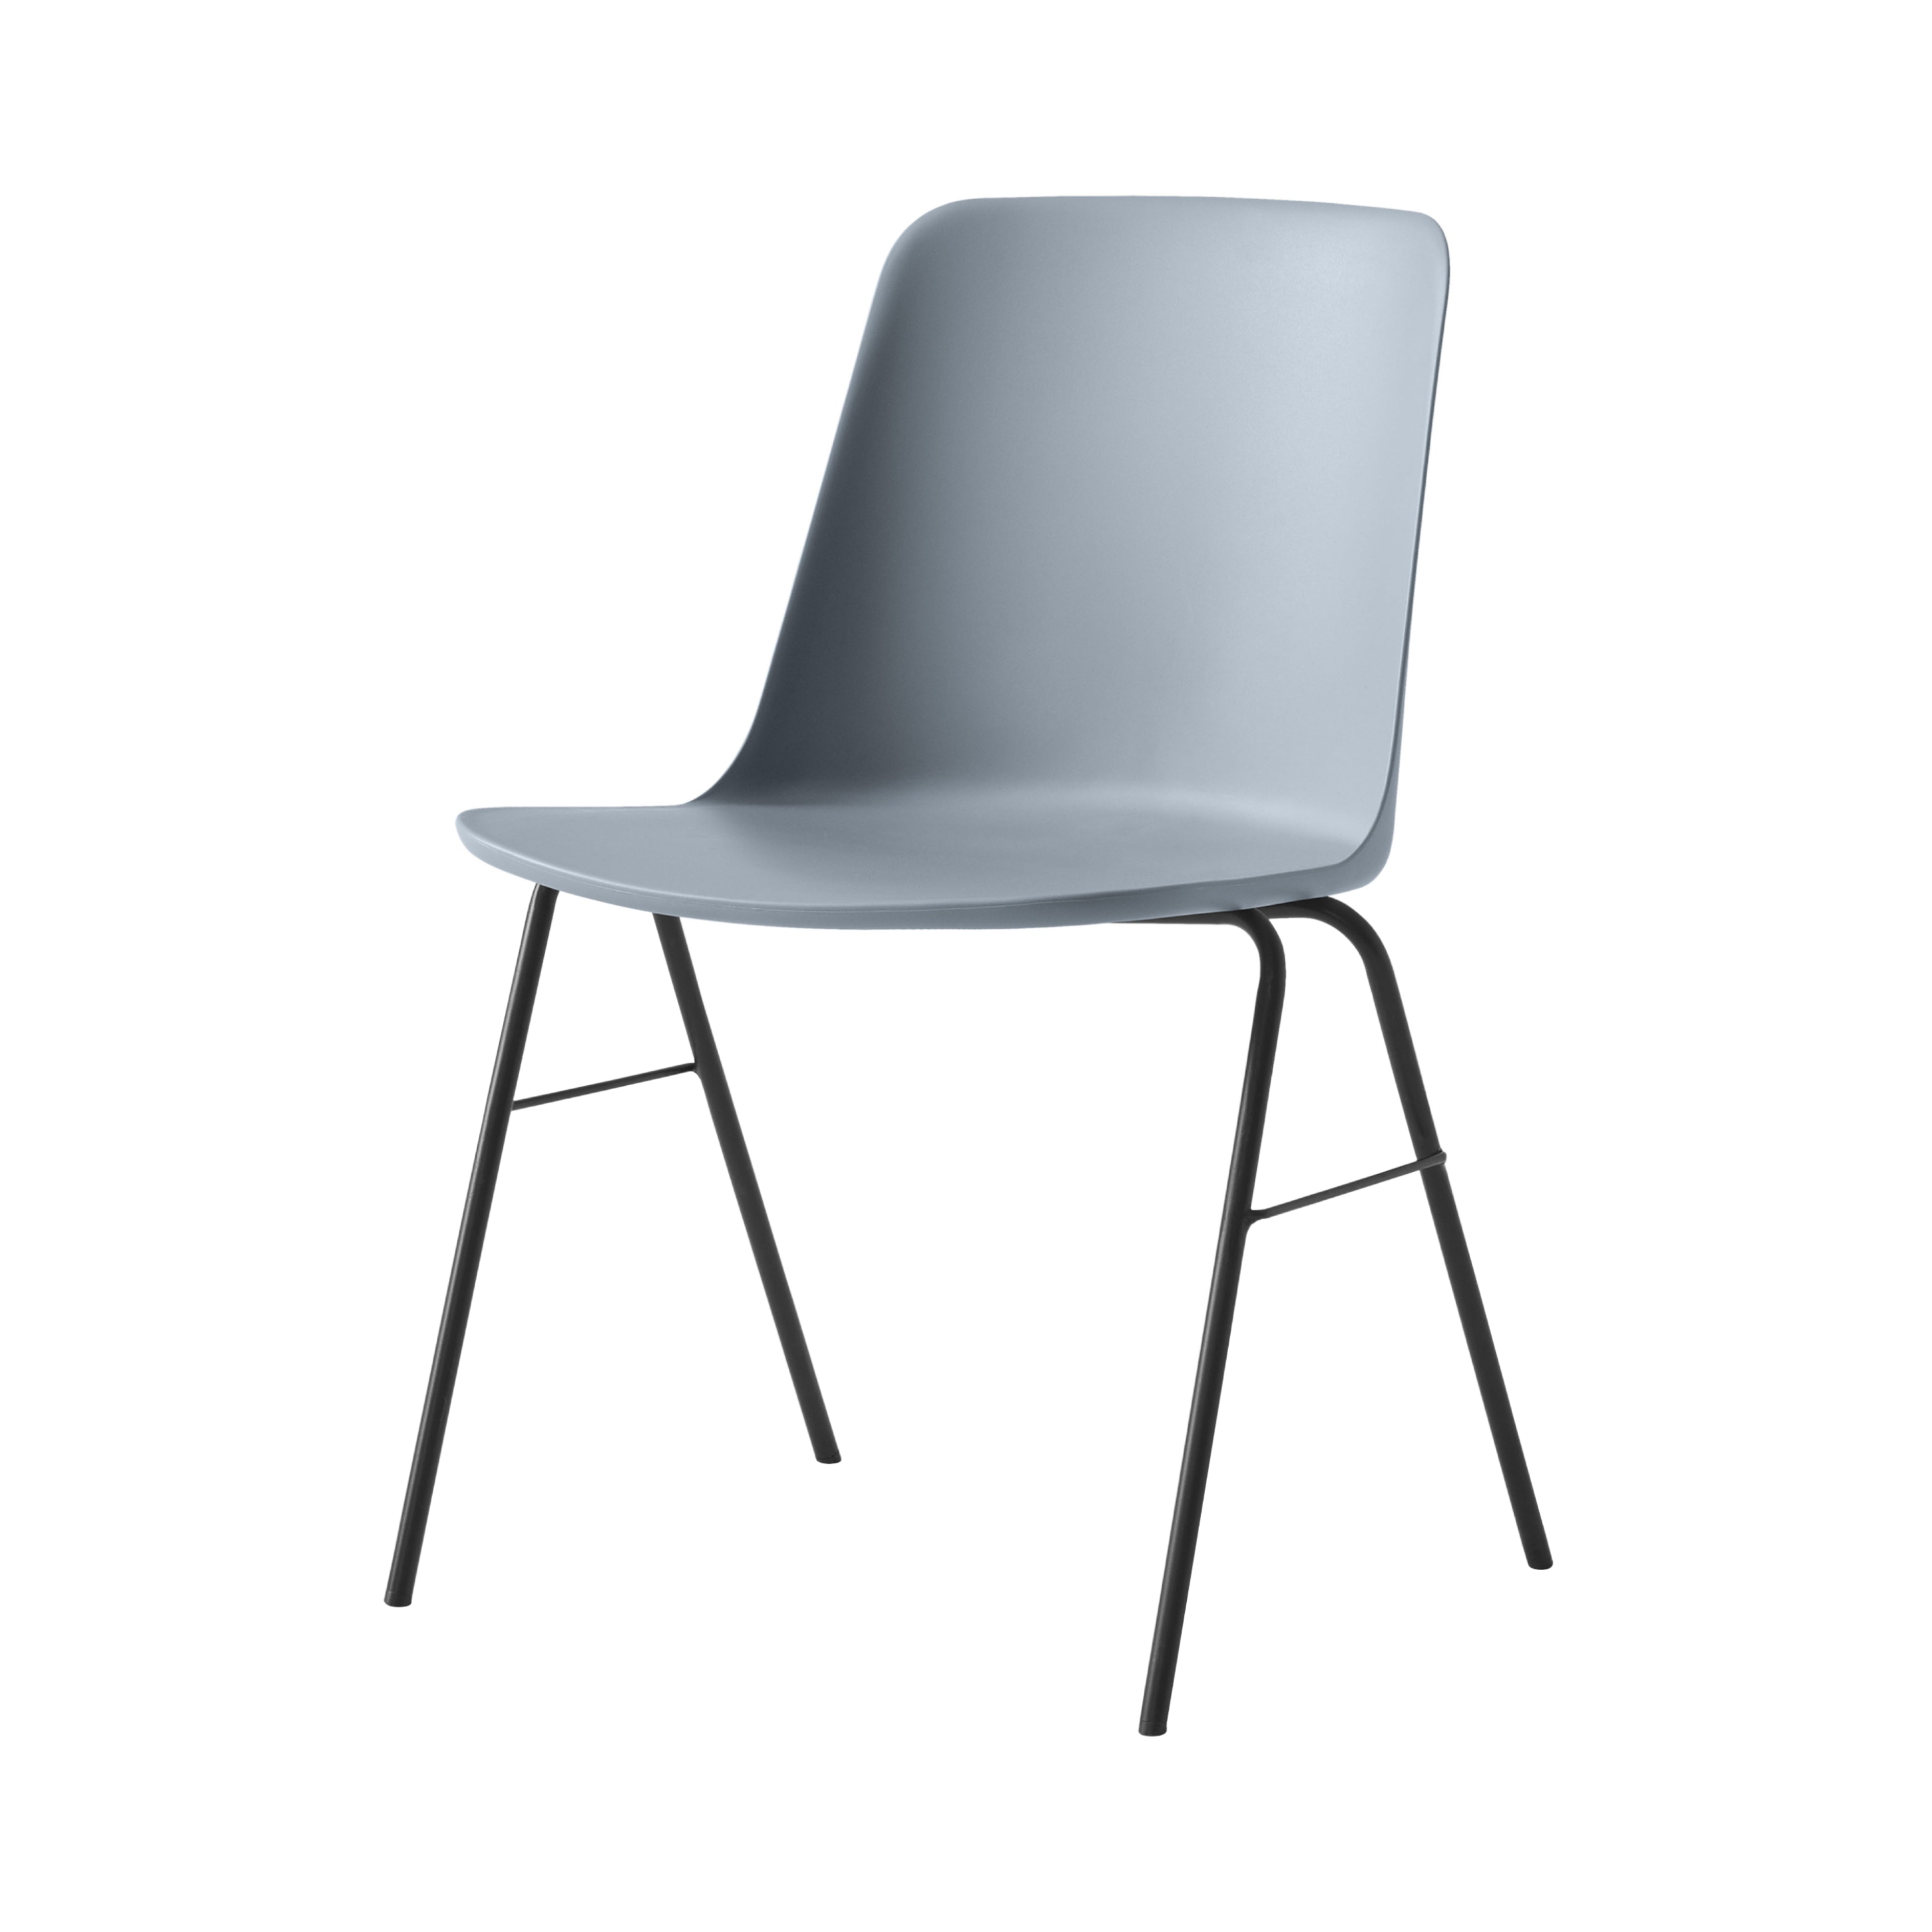 Rely Chair HW26: Light Blue + Black